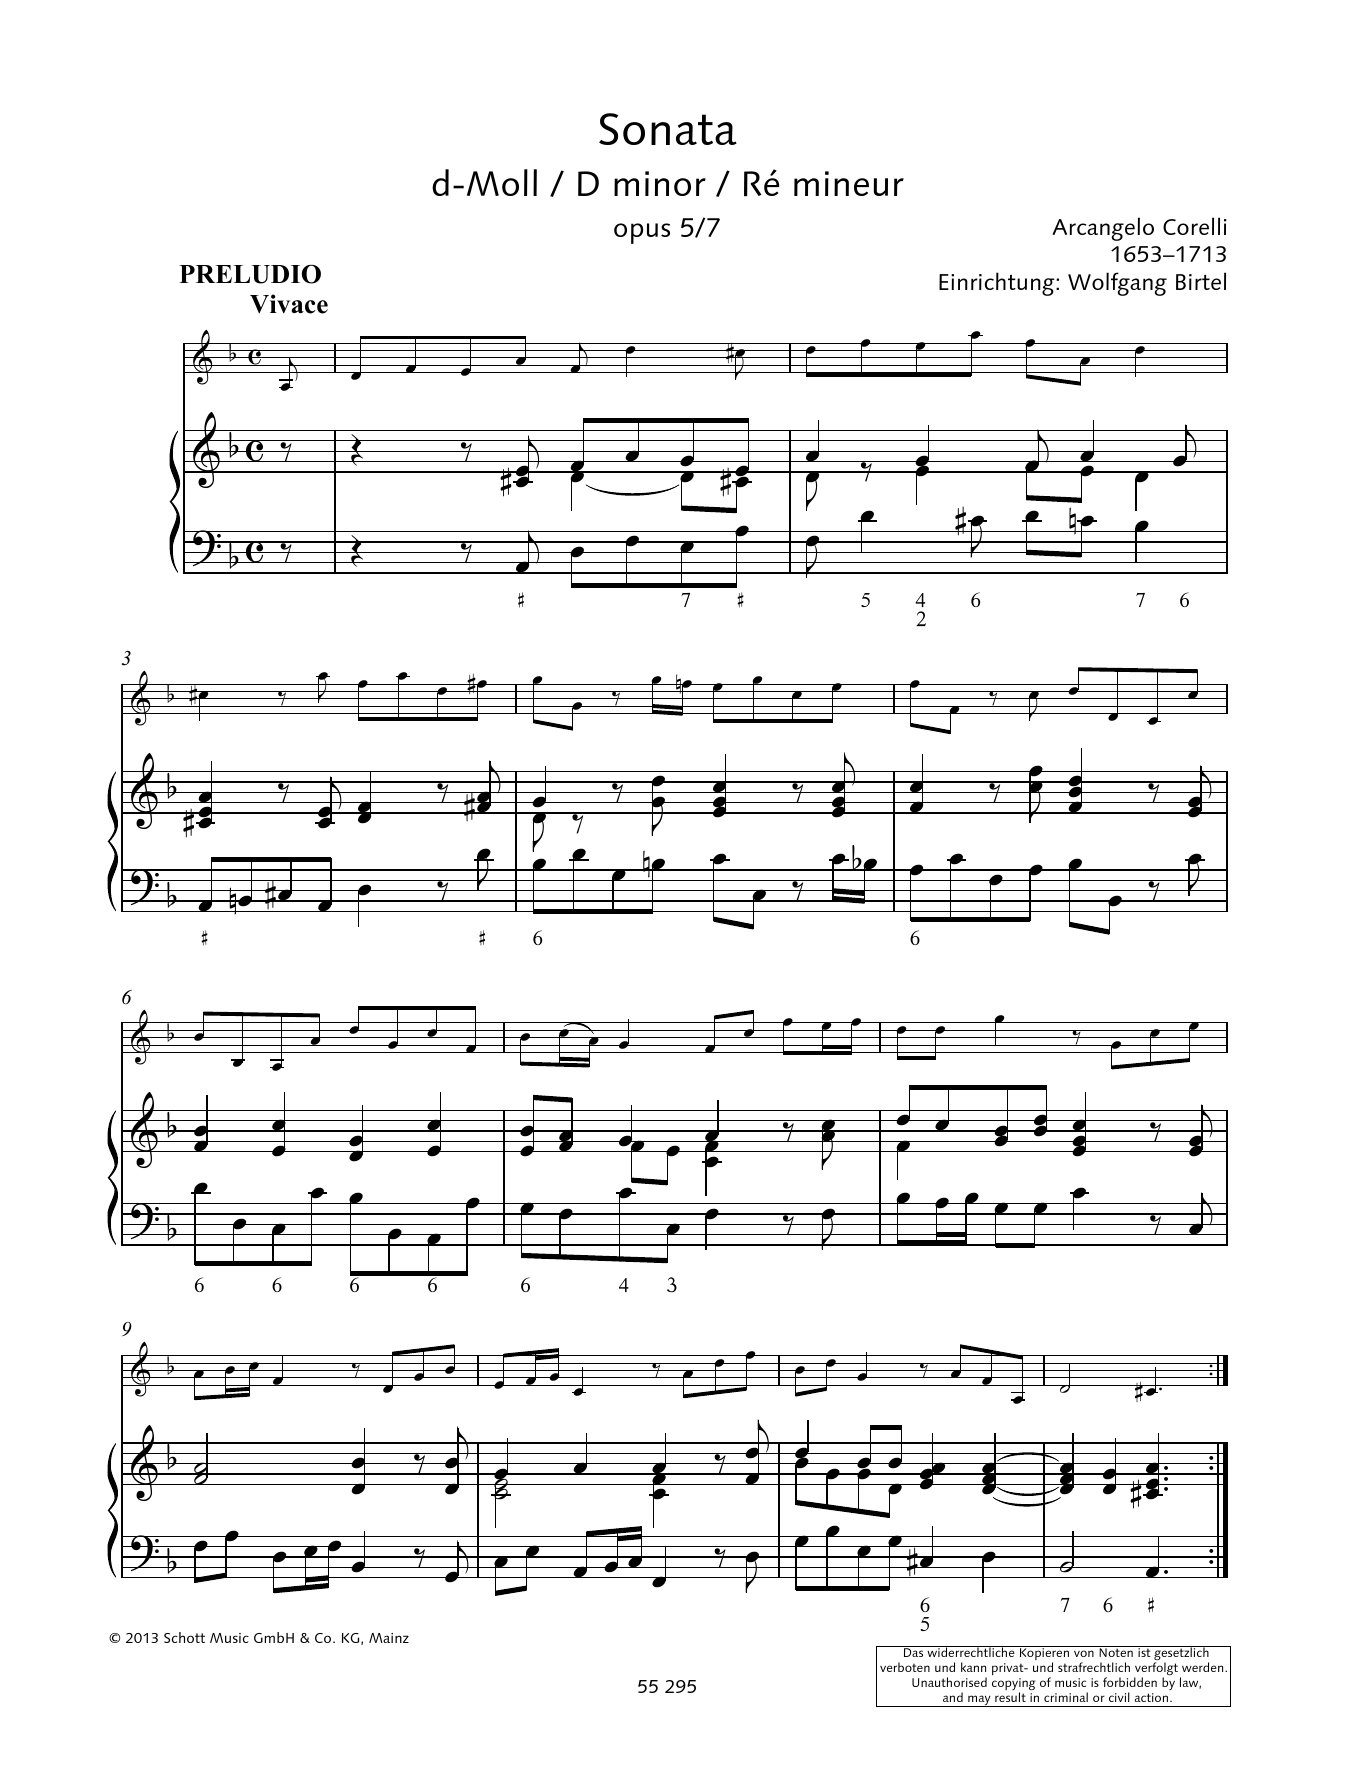 Sonata D Minor sheet music